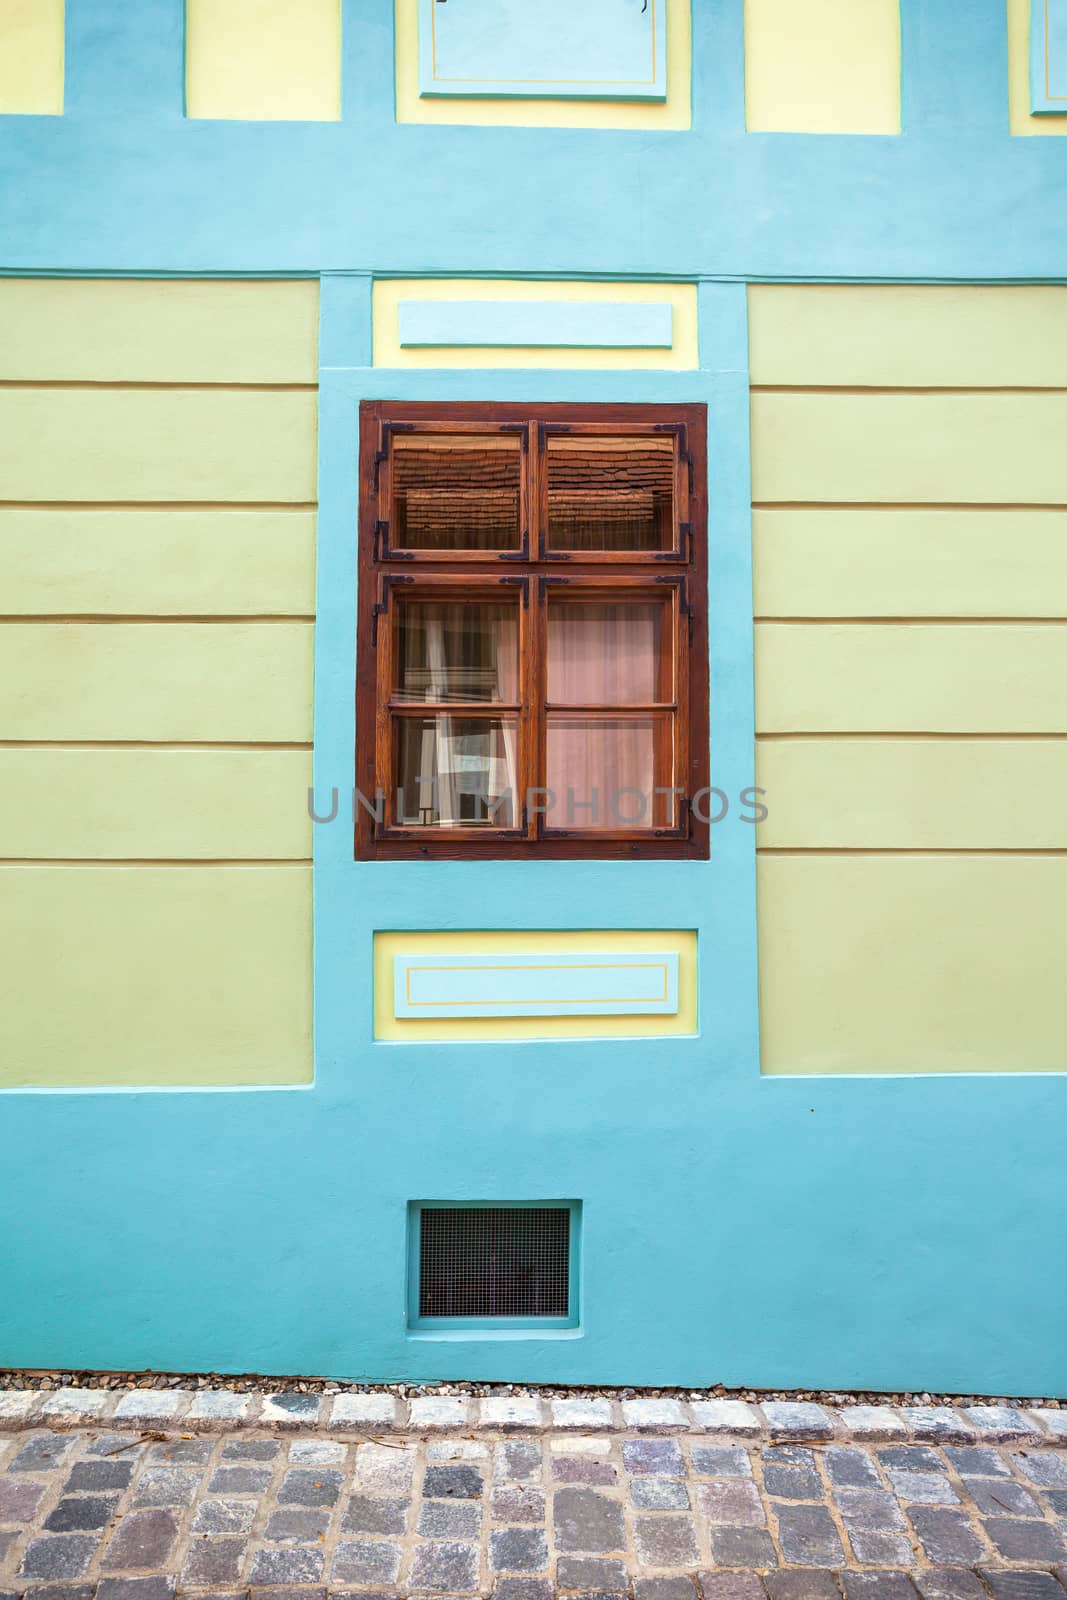 Sighisoara, Romania - June 23, 2013: Blue house facade with wooden window from Sighisoara city old center, Transylvania, Romania